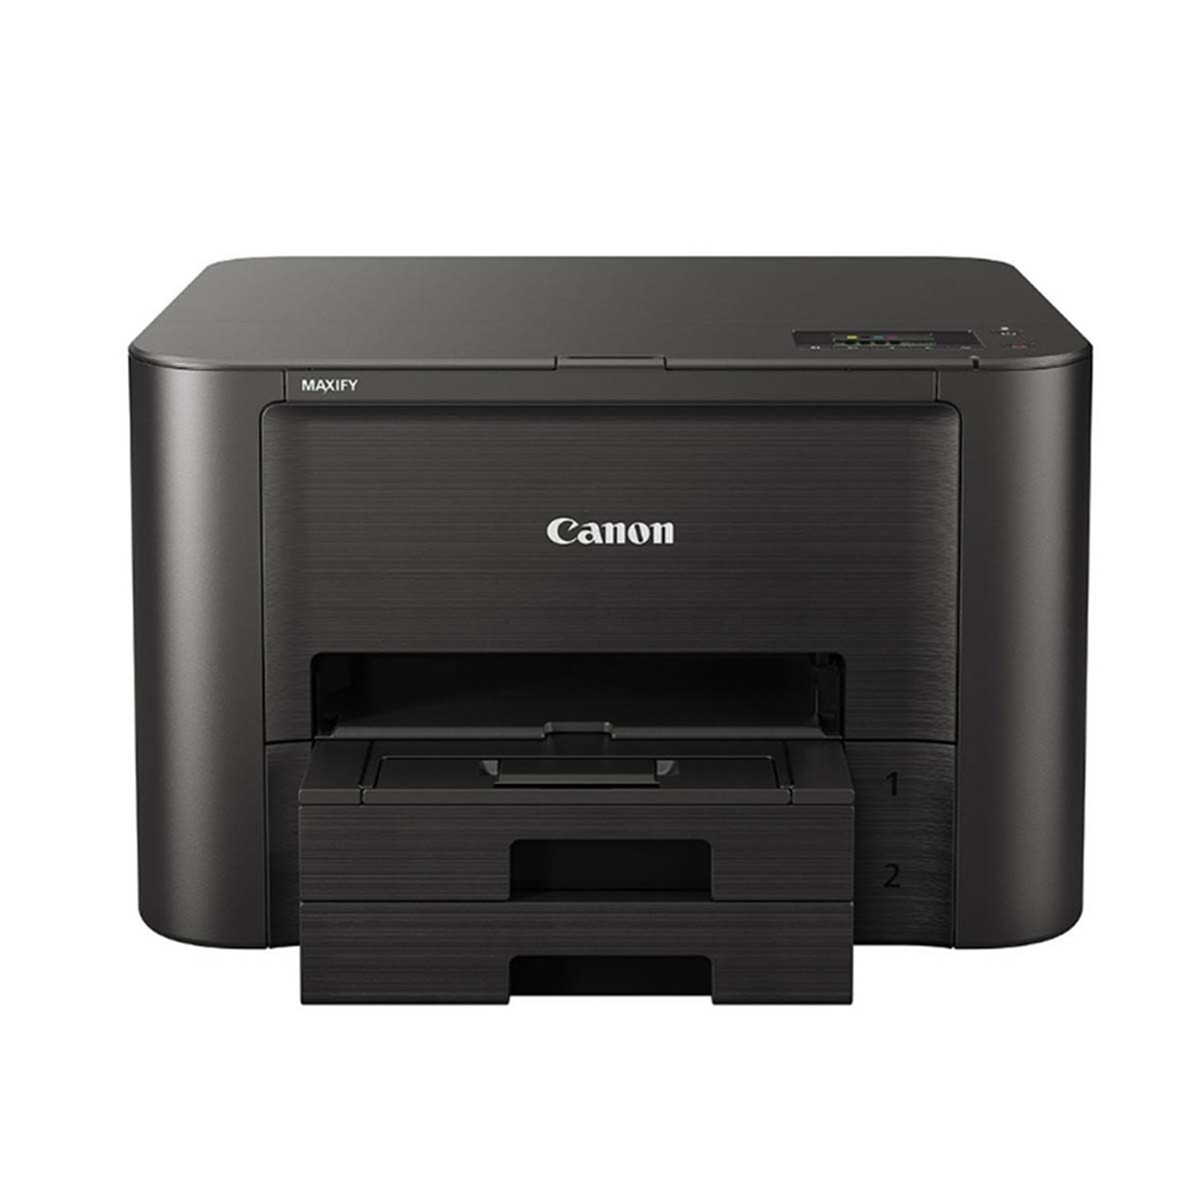 Impressora Canon Maxify IB4110 IB-4110 | Jato de Tinta com Conexão Wireless e Duplex